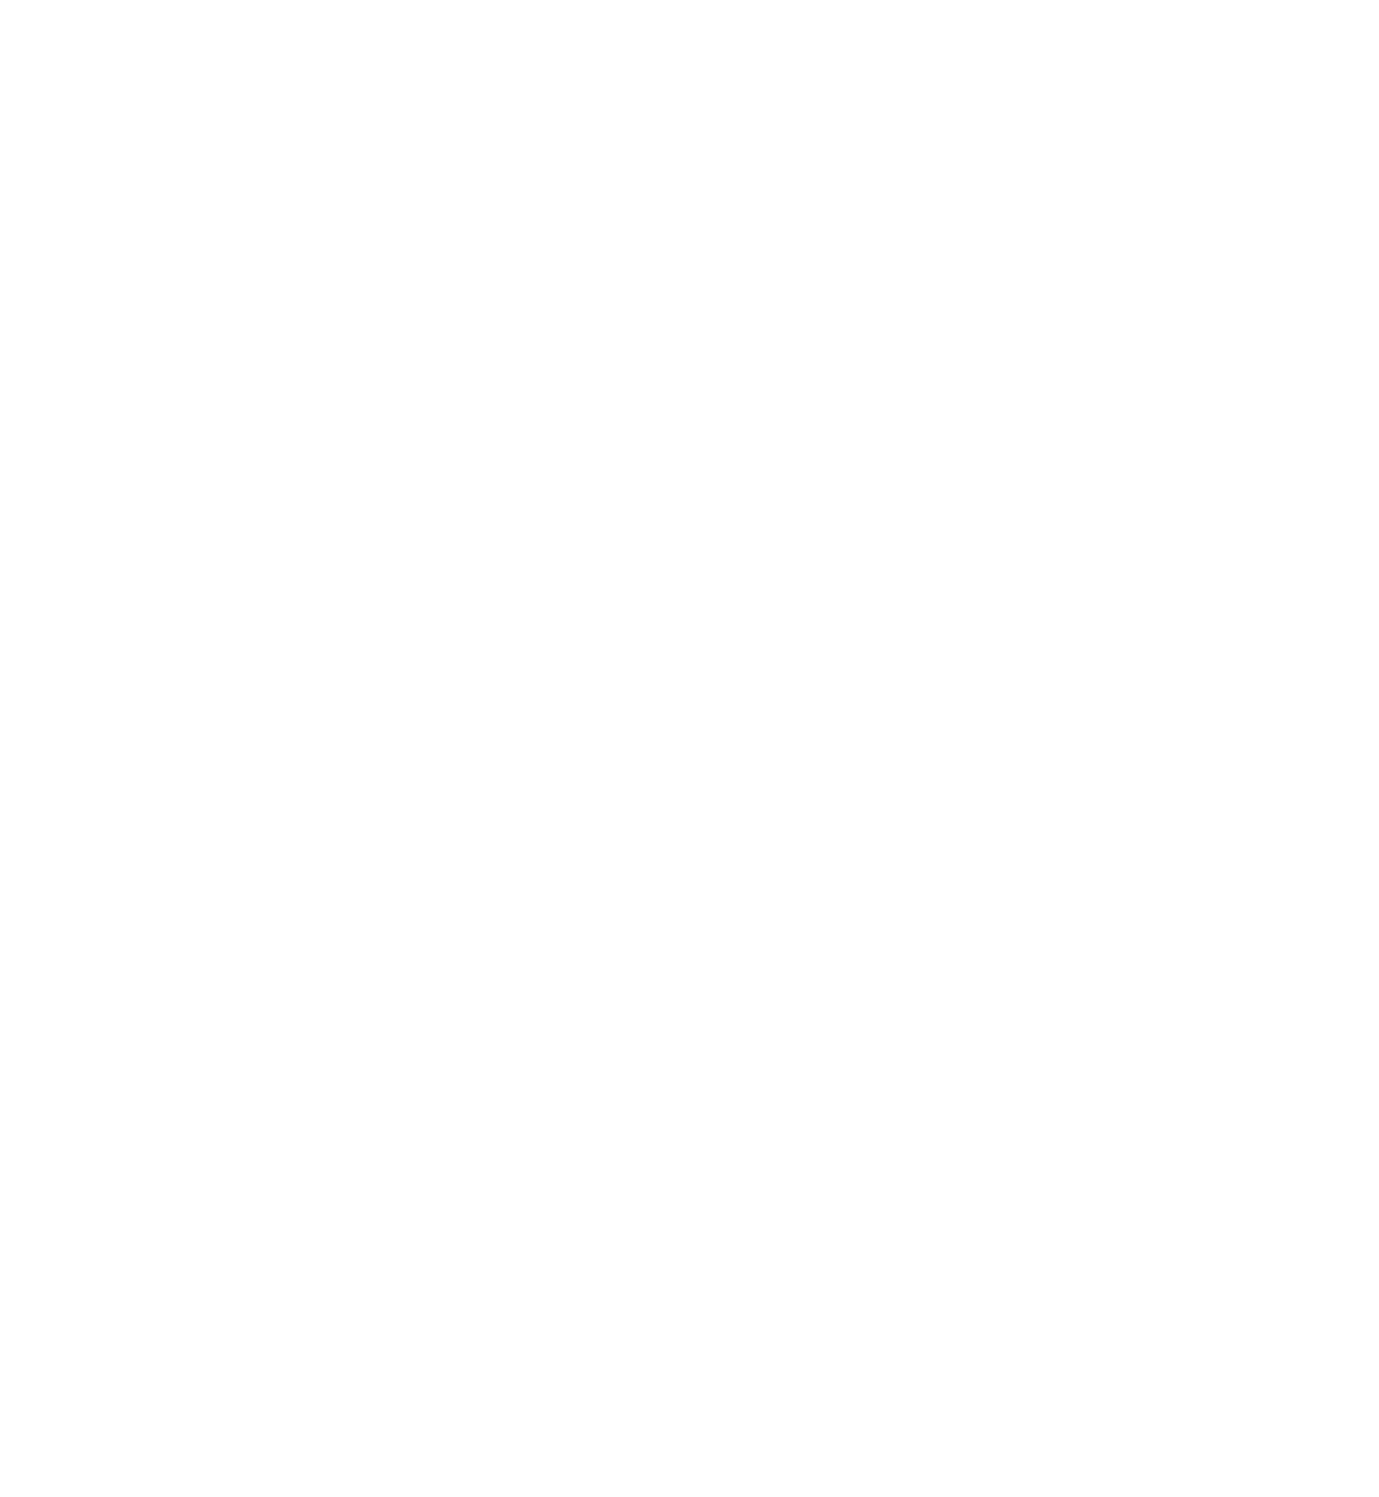 Veris Residential logo pour fonds sombres (PNG transparent)